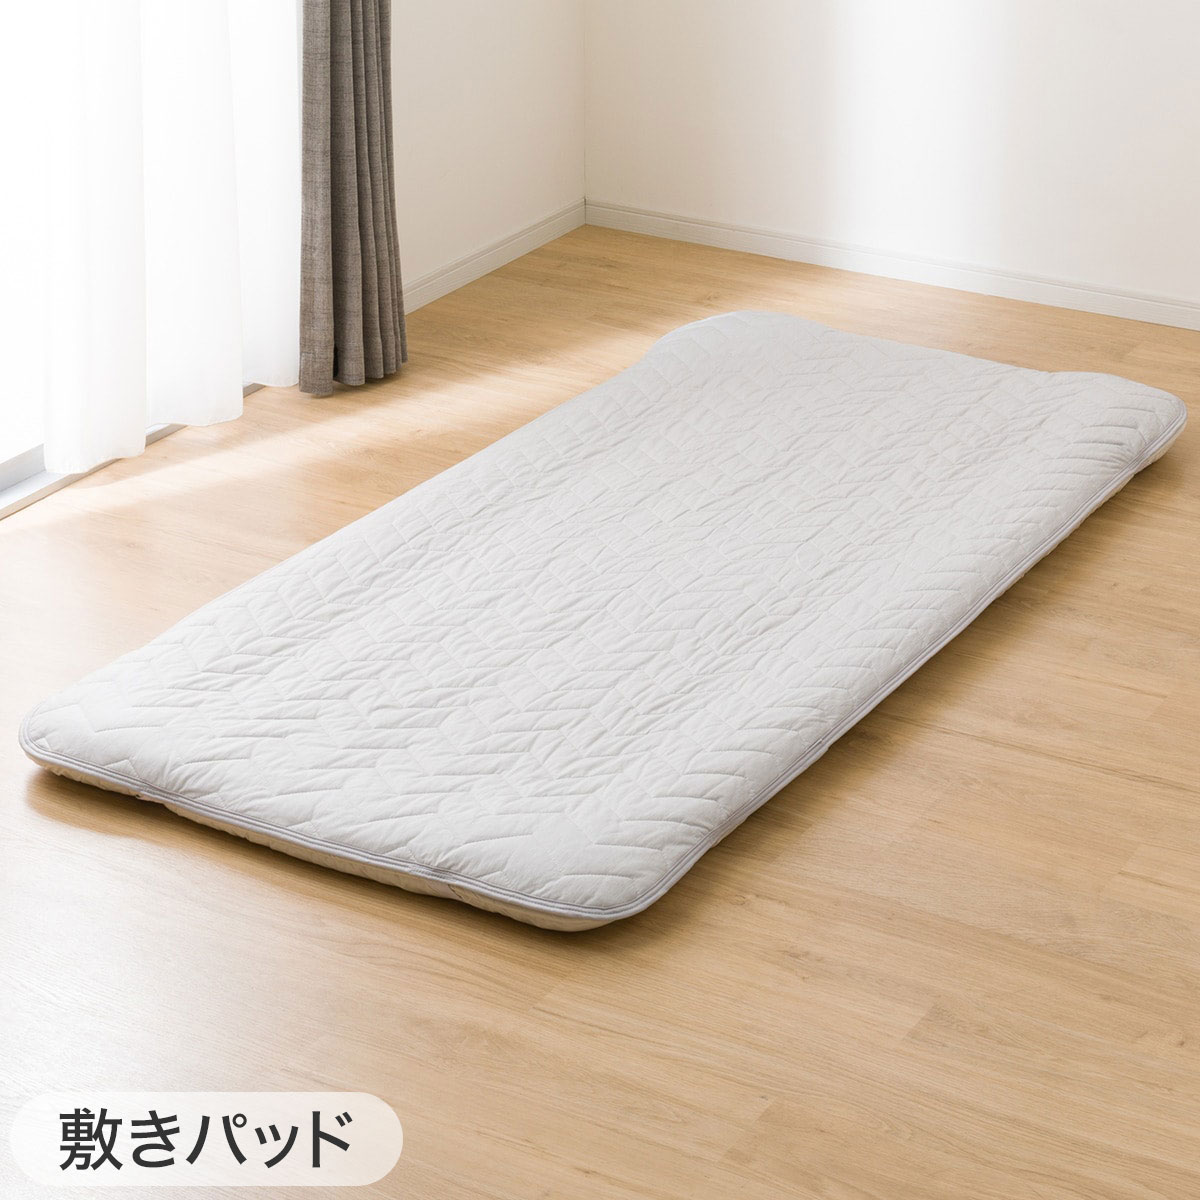  body futon * mattress pad * pillow pad N cool WSP bedding 3 point set single gray (GY S2403)nitoli